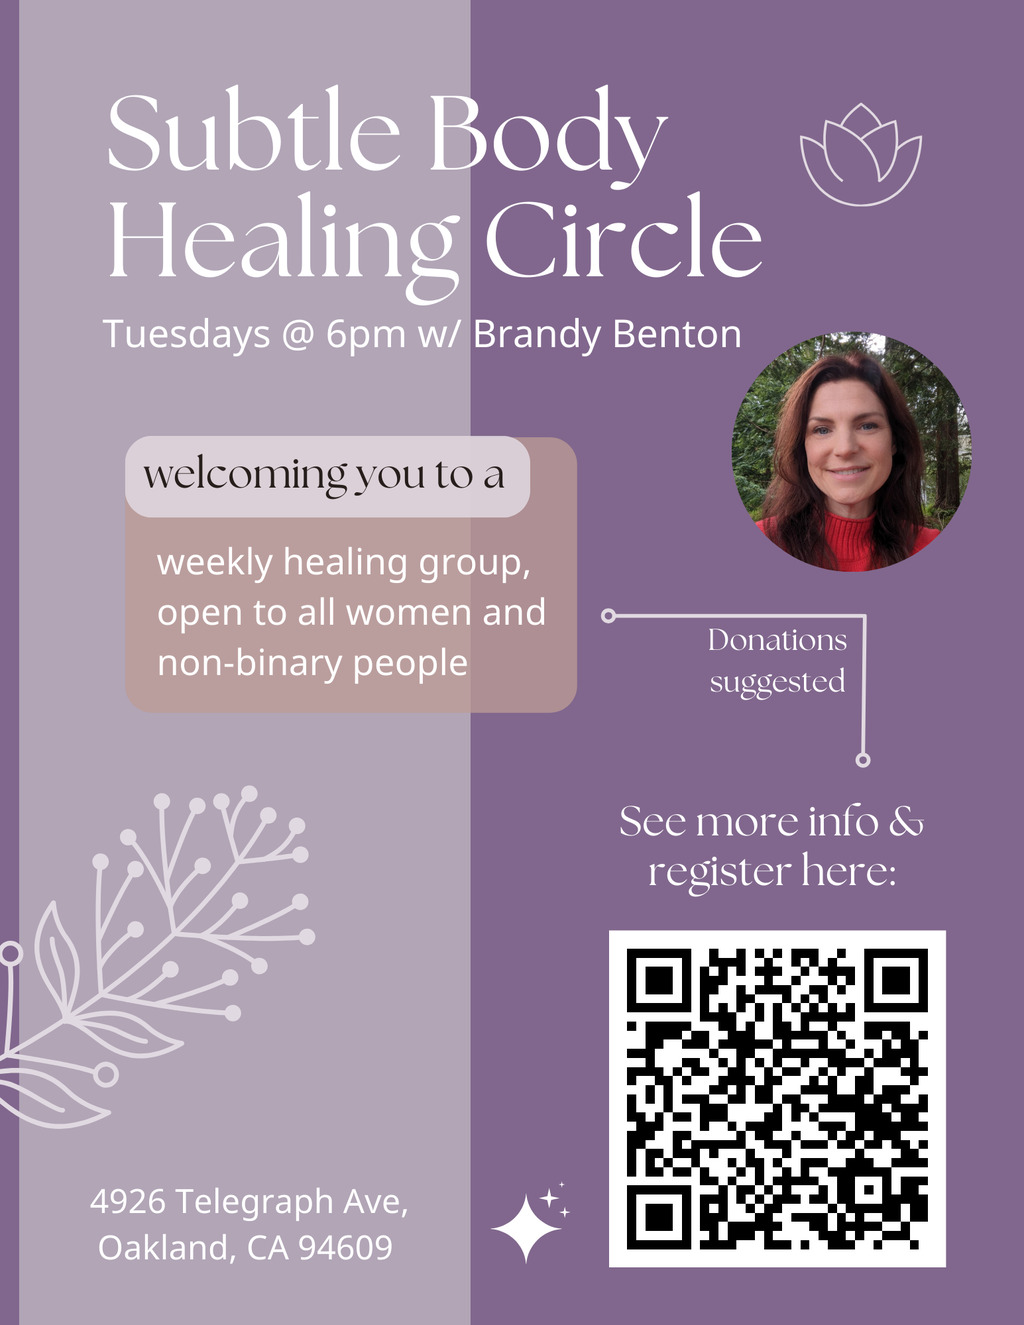 Sagrada Sacred Arts Welcome to the Subtlc Body Healing Circle  promotion flier on Digifli com